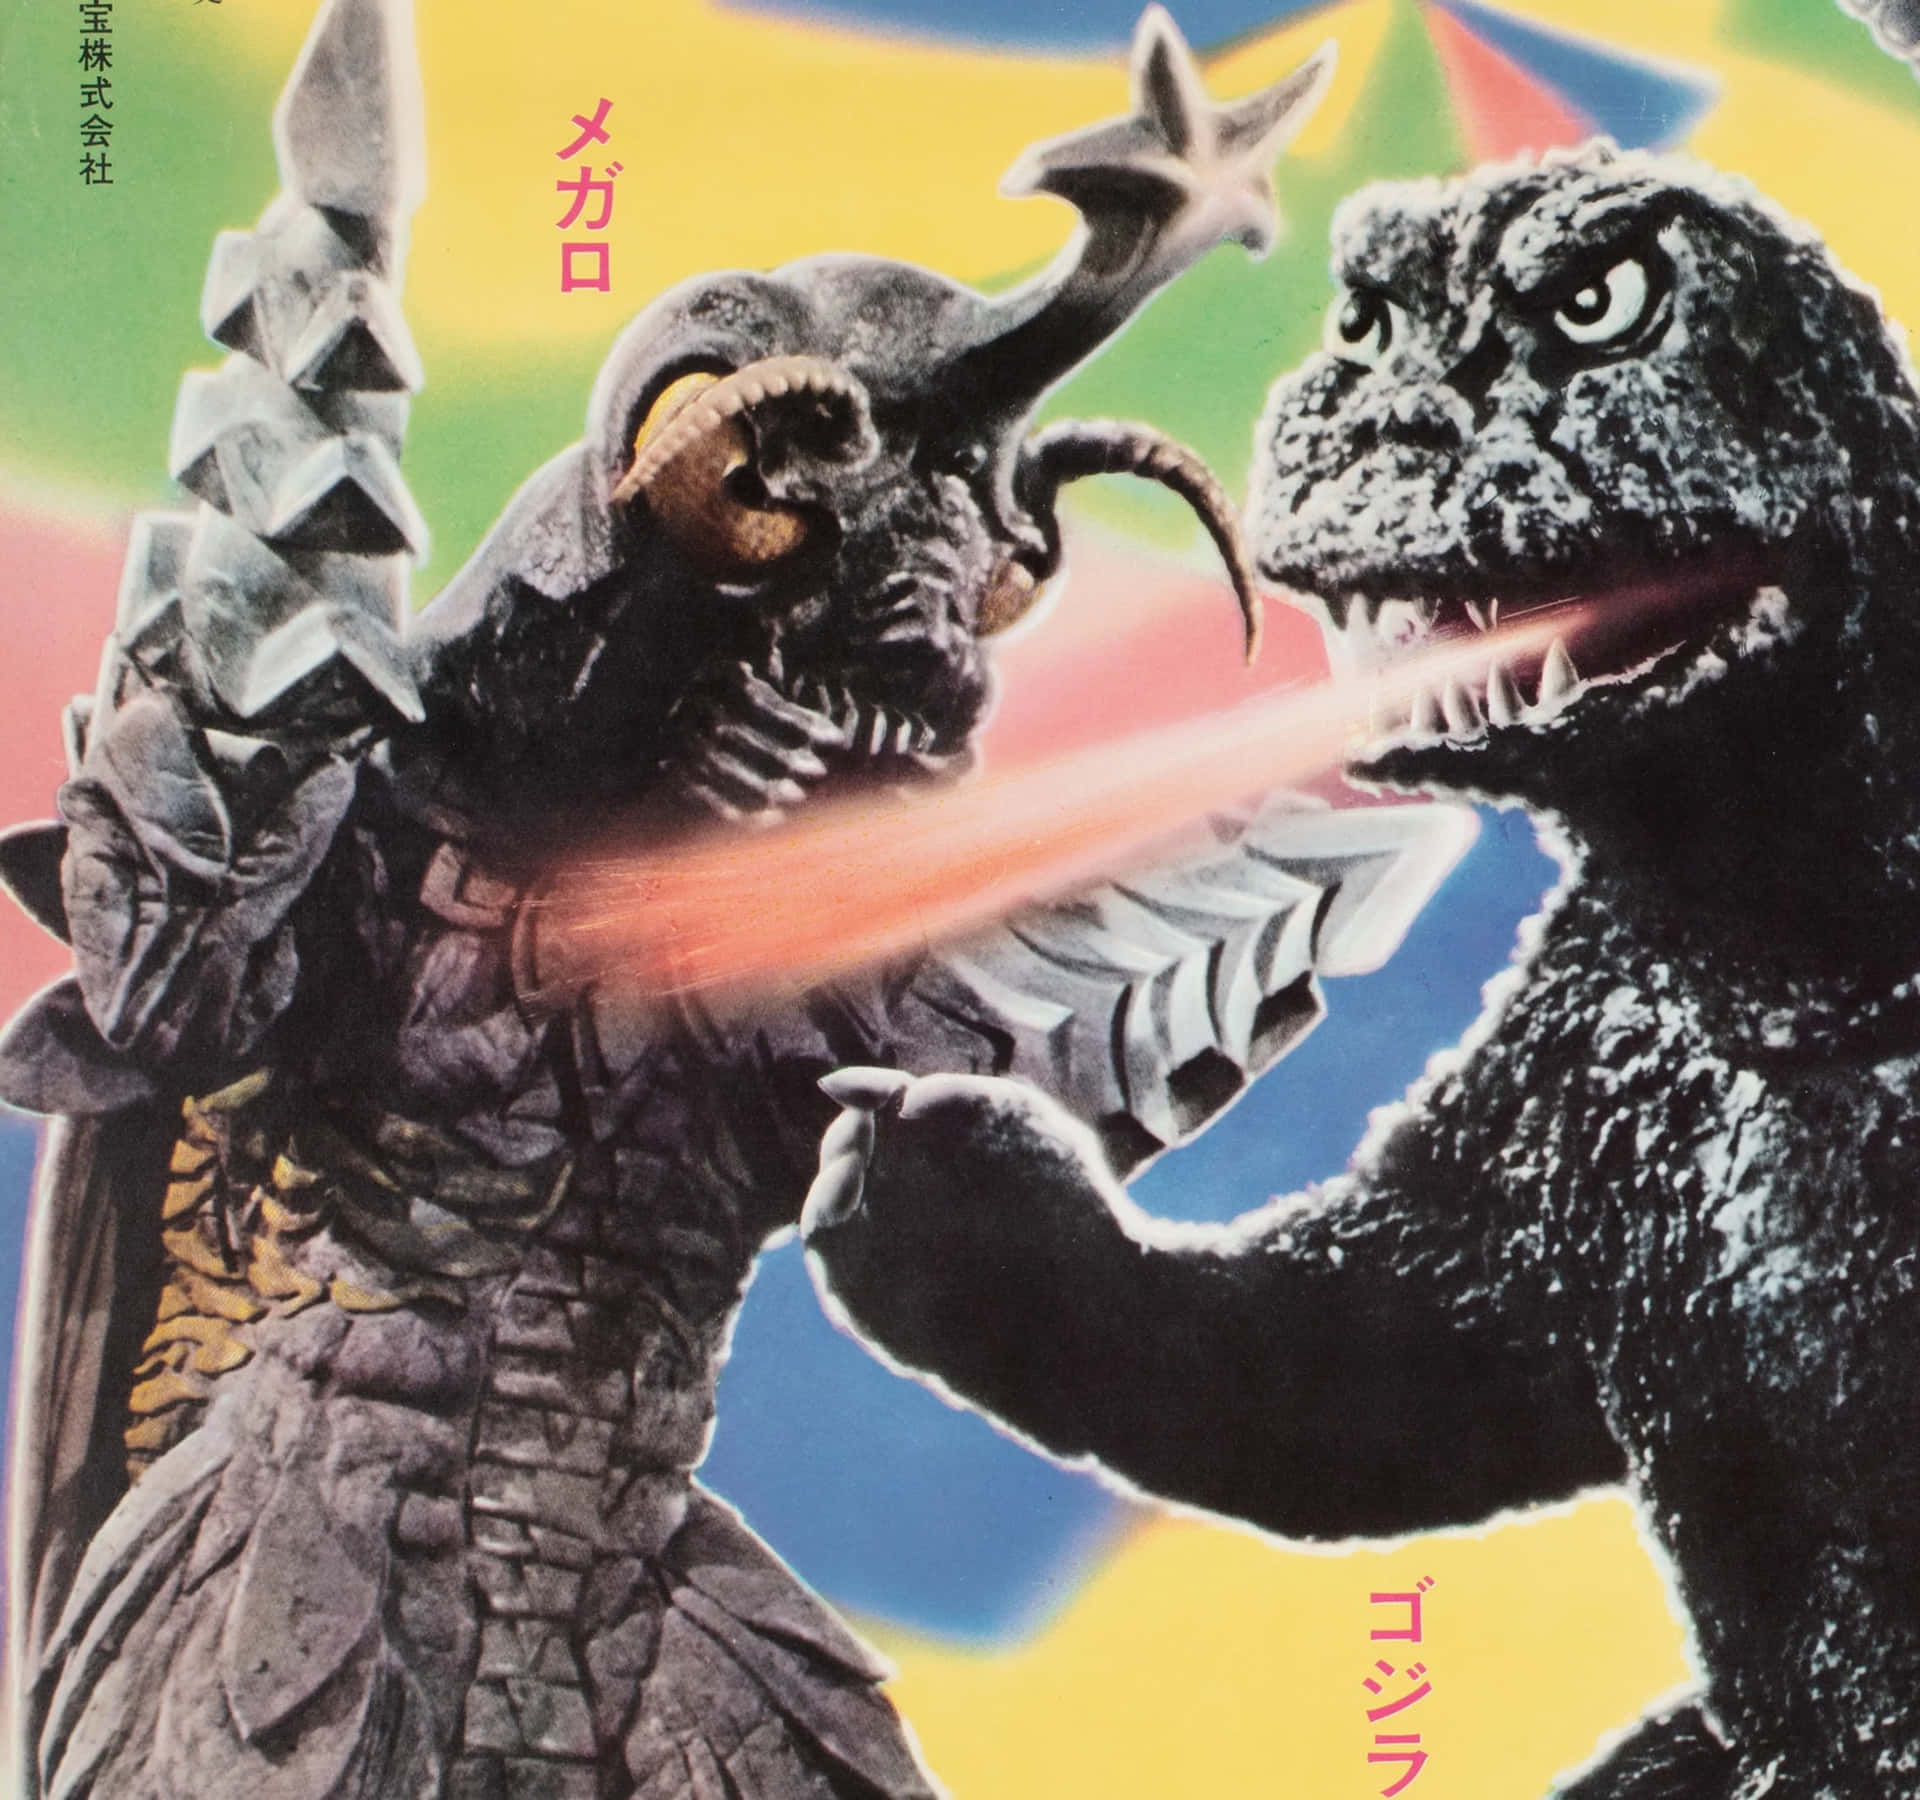 Godzilla and Megalon battling in an epic showdown Wallpaper